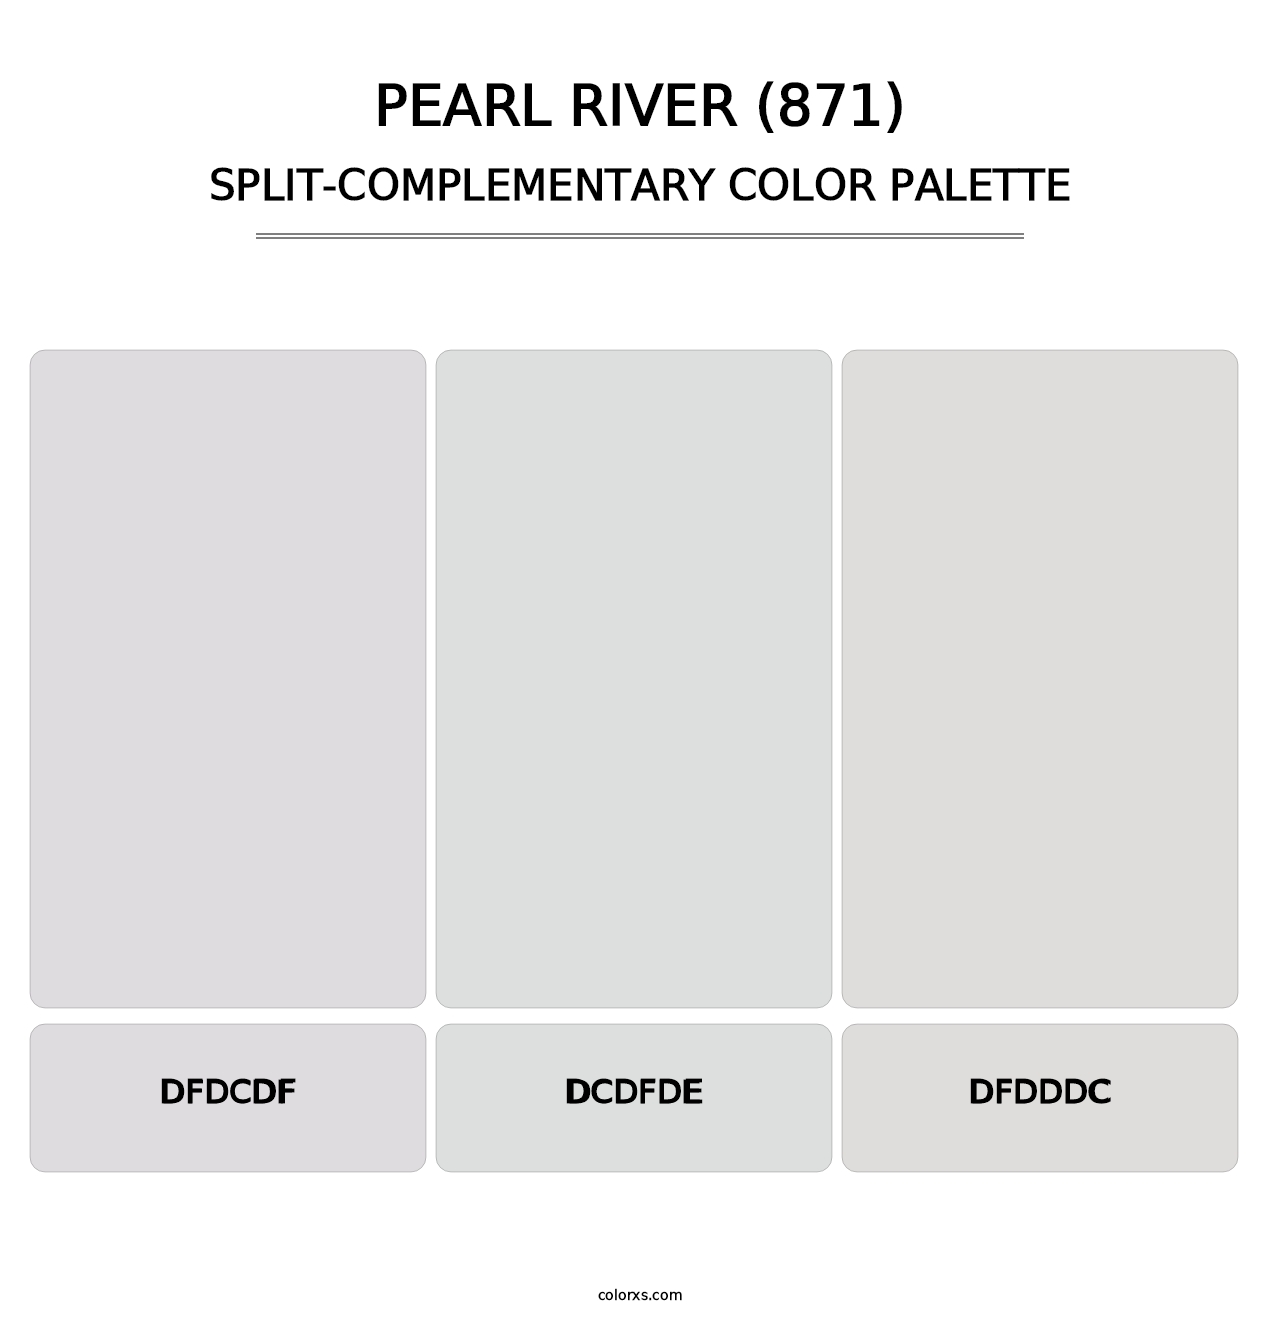 Pearl River (871) - Split-Complementary Color Palette